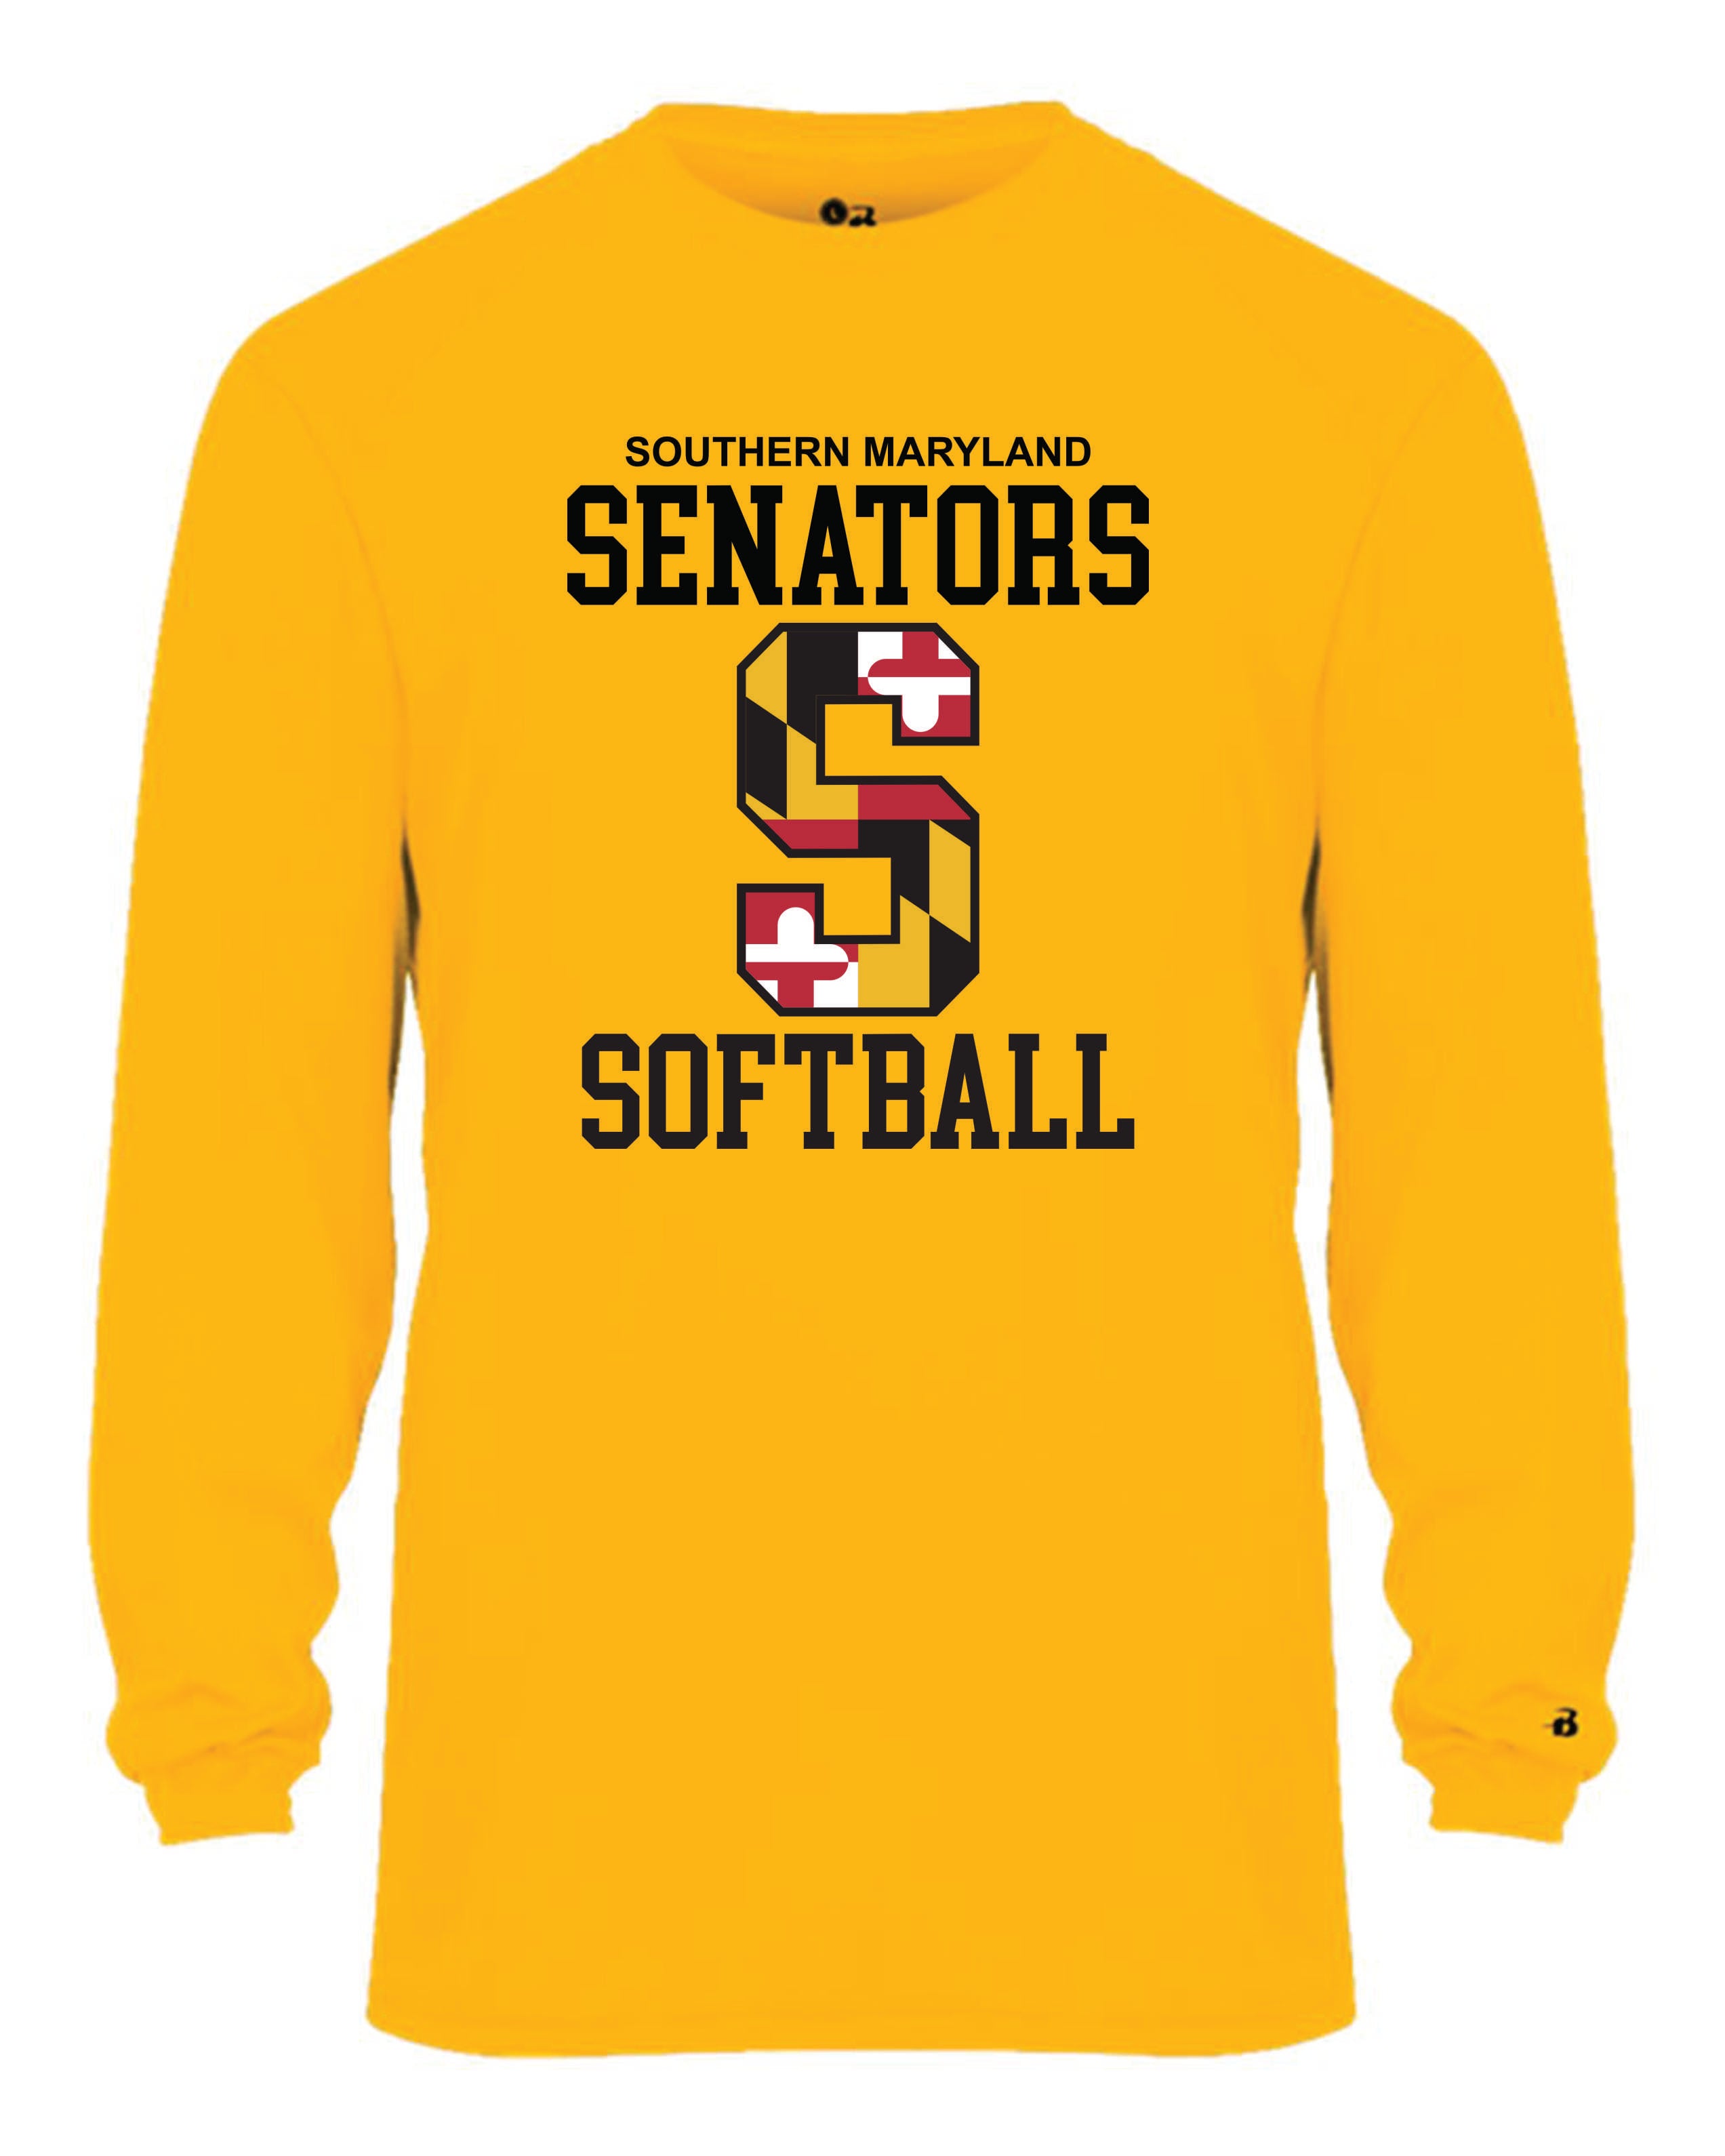 Senators Softball Long Sleeve Dri-Fit Shirt Big S Logo